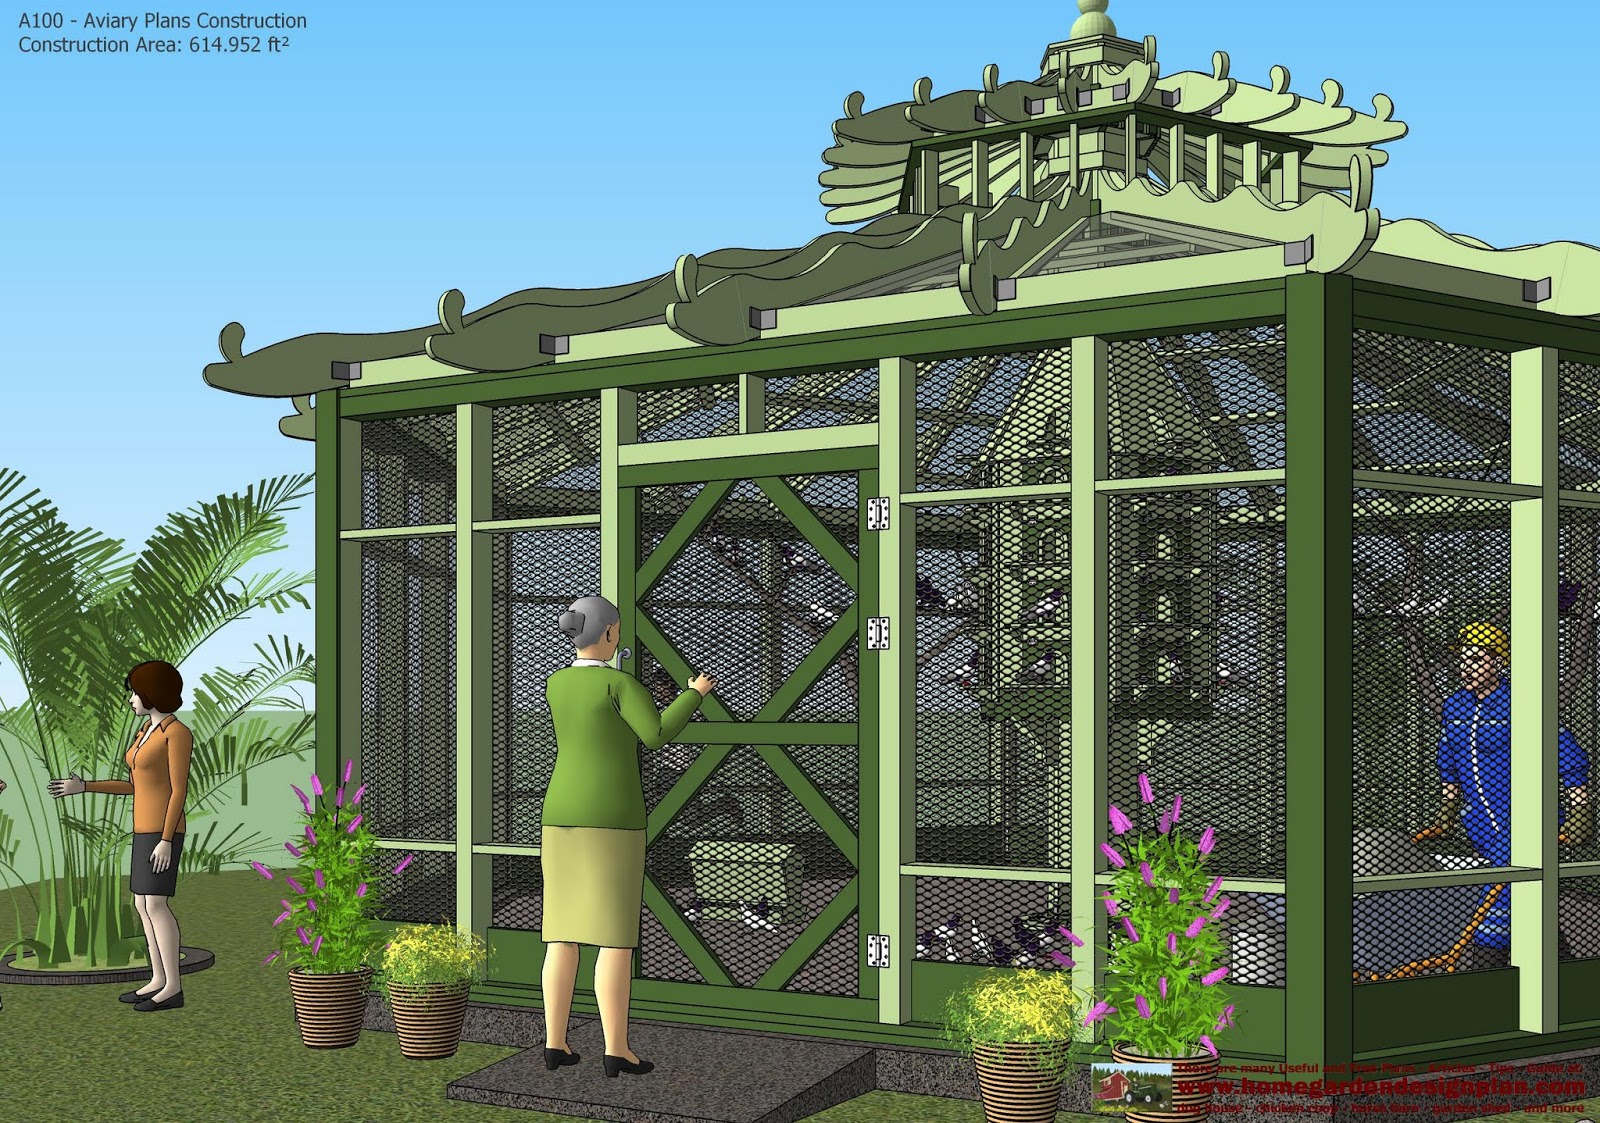  DIY Indoor Finch Aviary besides Bird House Design Plans. on home bird